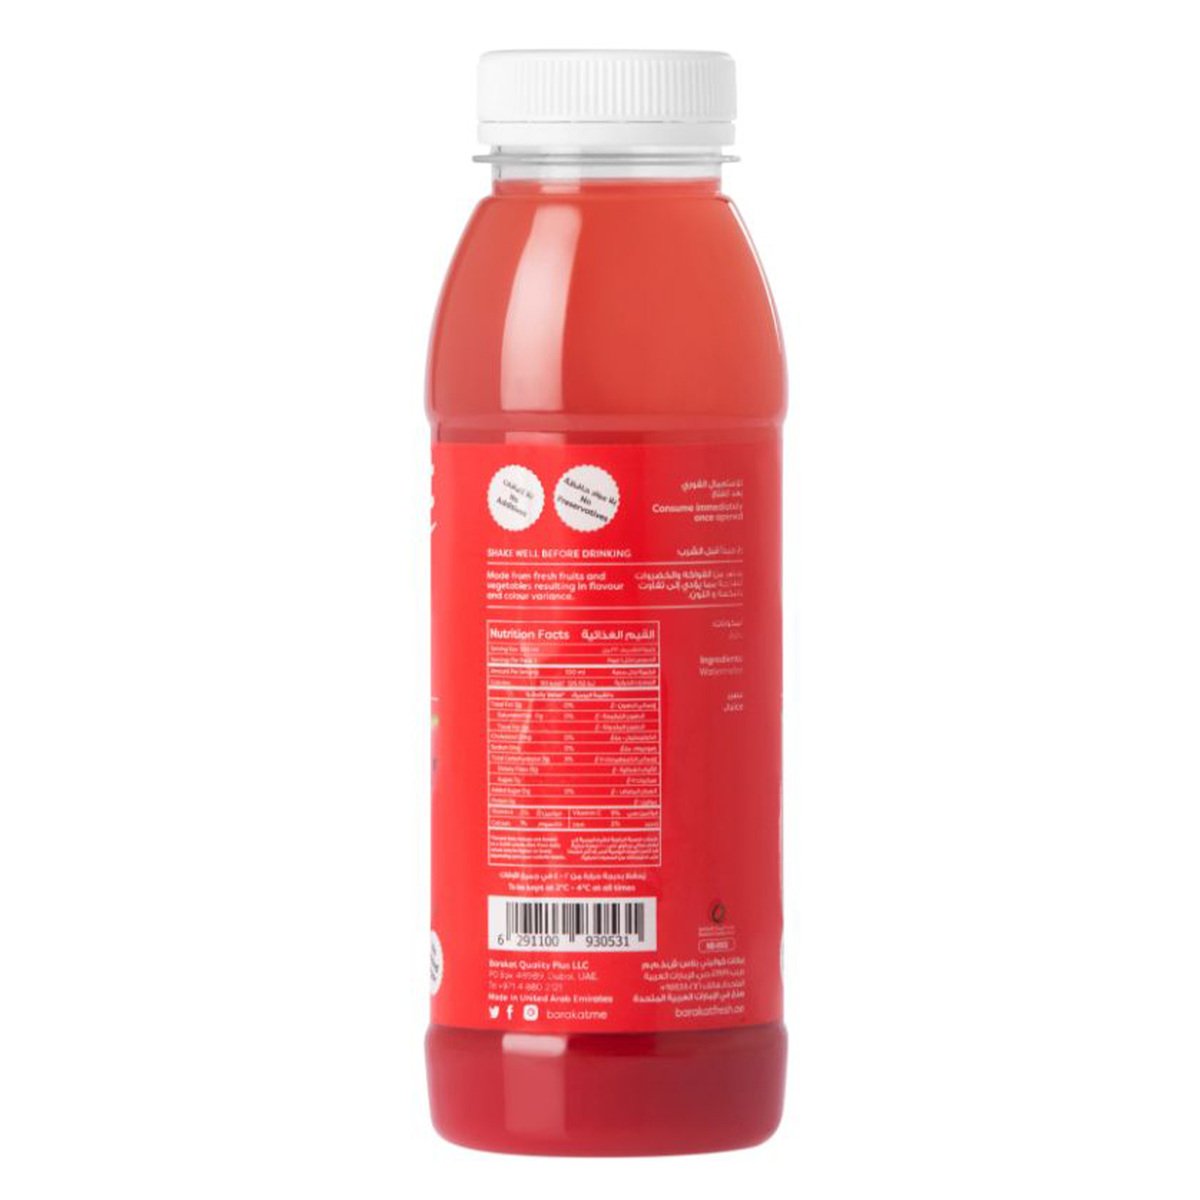 Barakat Watermelon Juice Fresh 330 ml